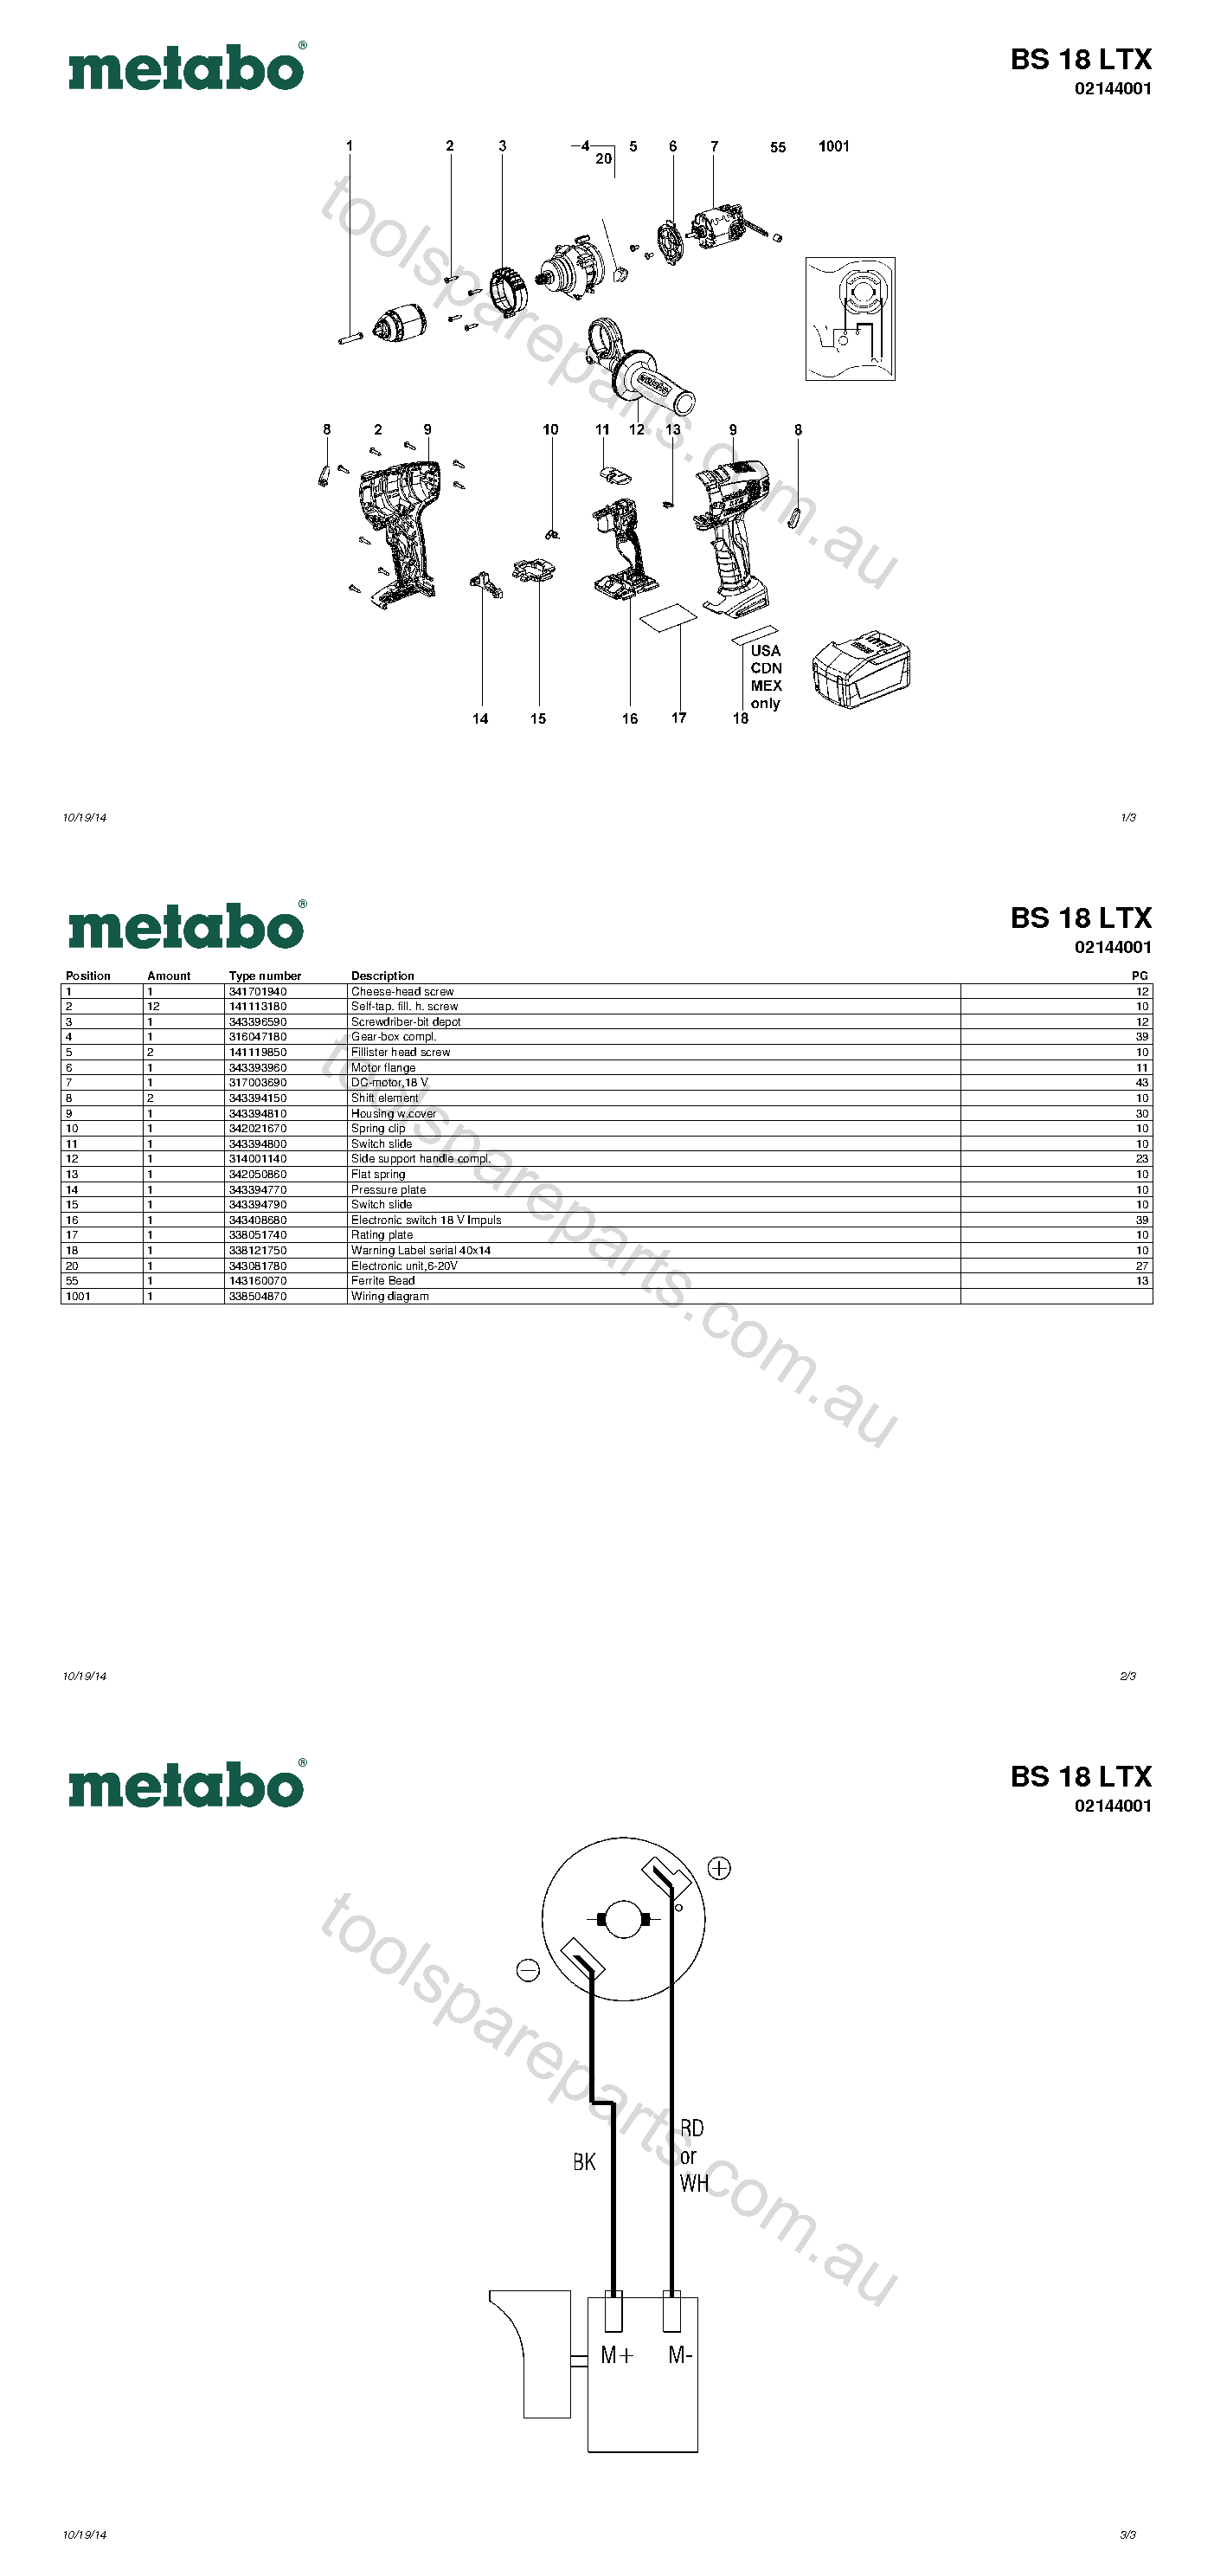 Metabo BS 18 LTX 02144001  Diagram 1